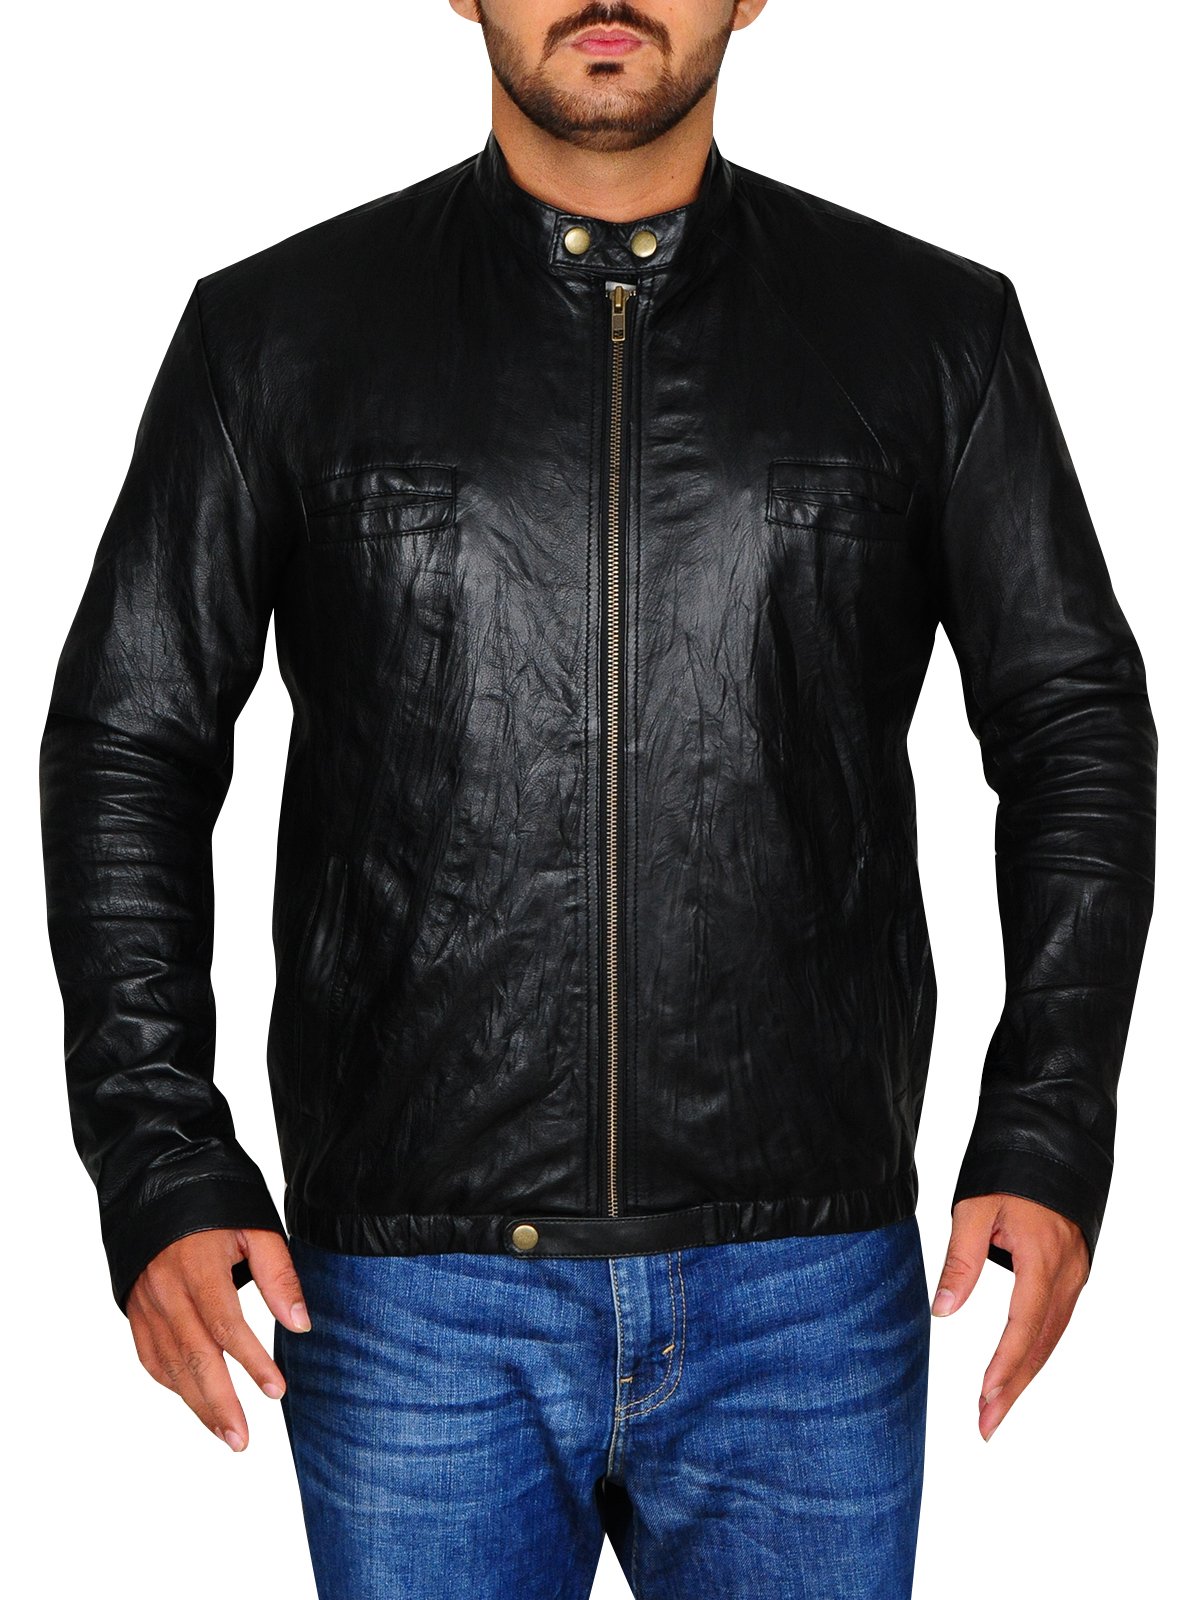 17 Again Zac Efron Leather Jacket- RockStar Jacket